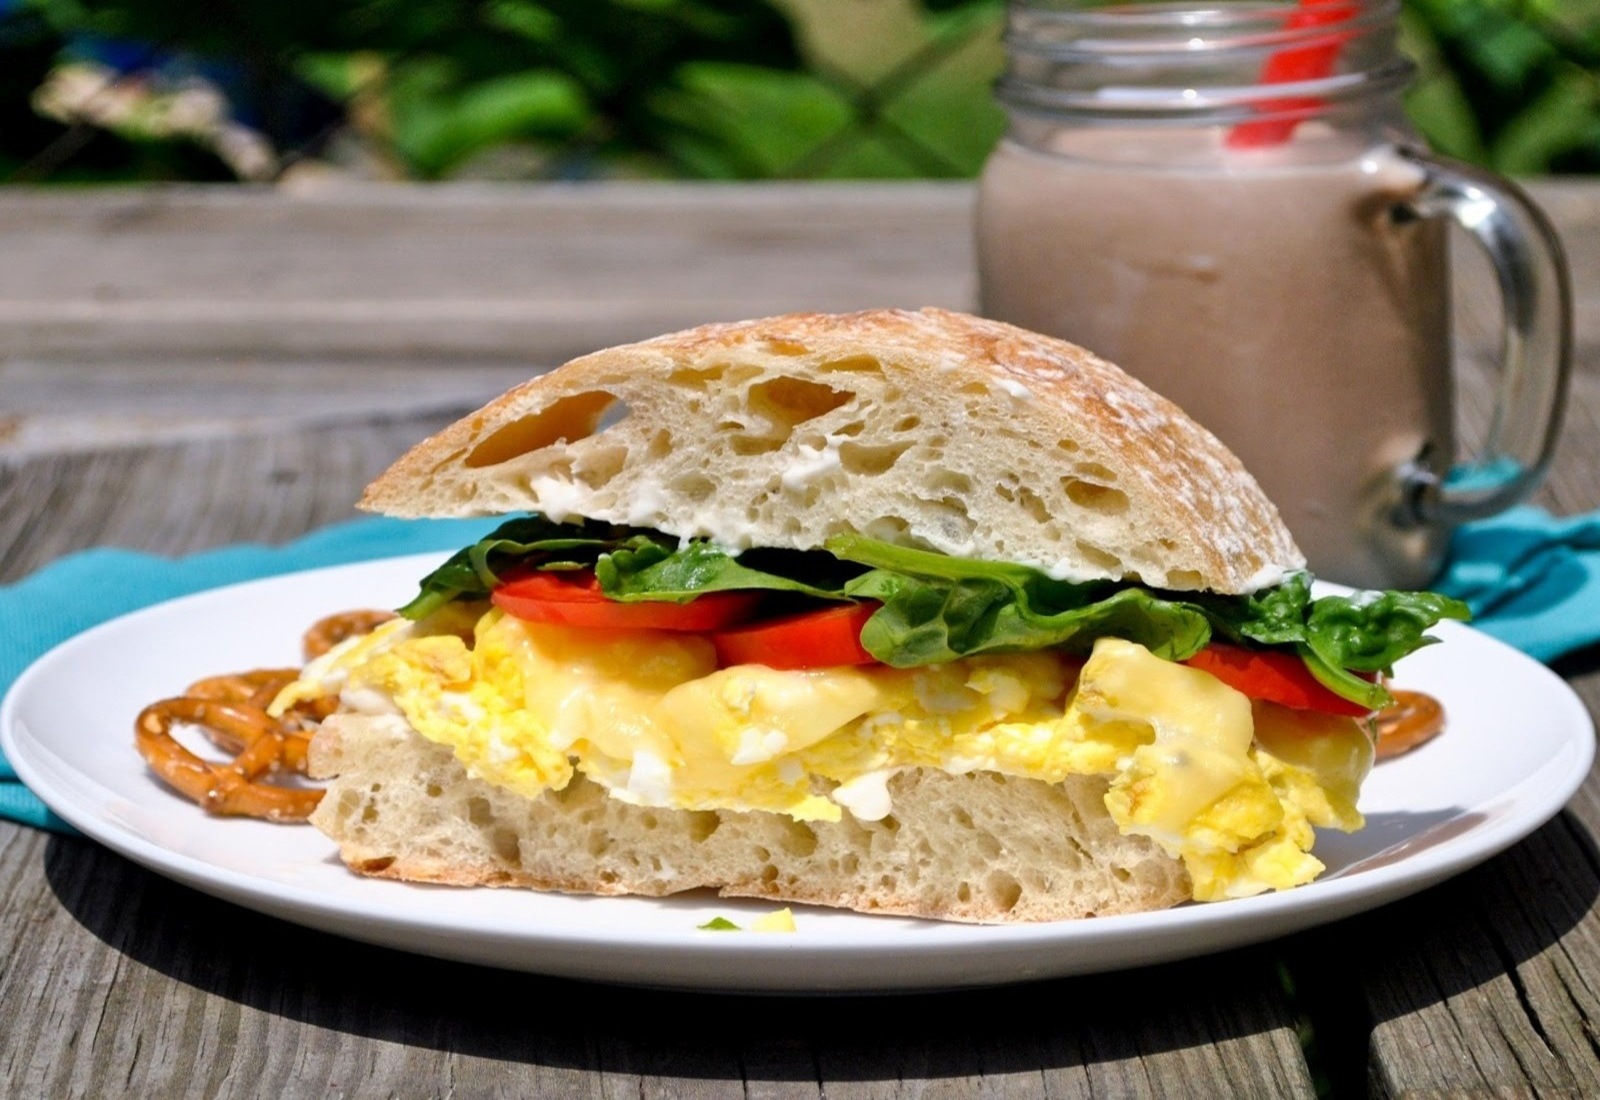 19-egg-sandwich-nutrition-facts